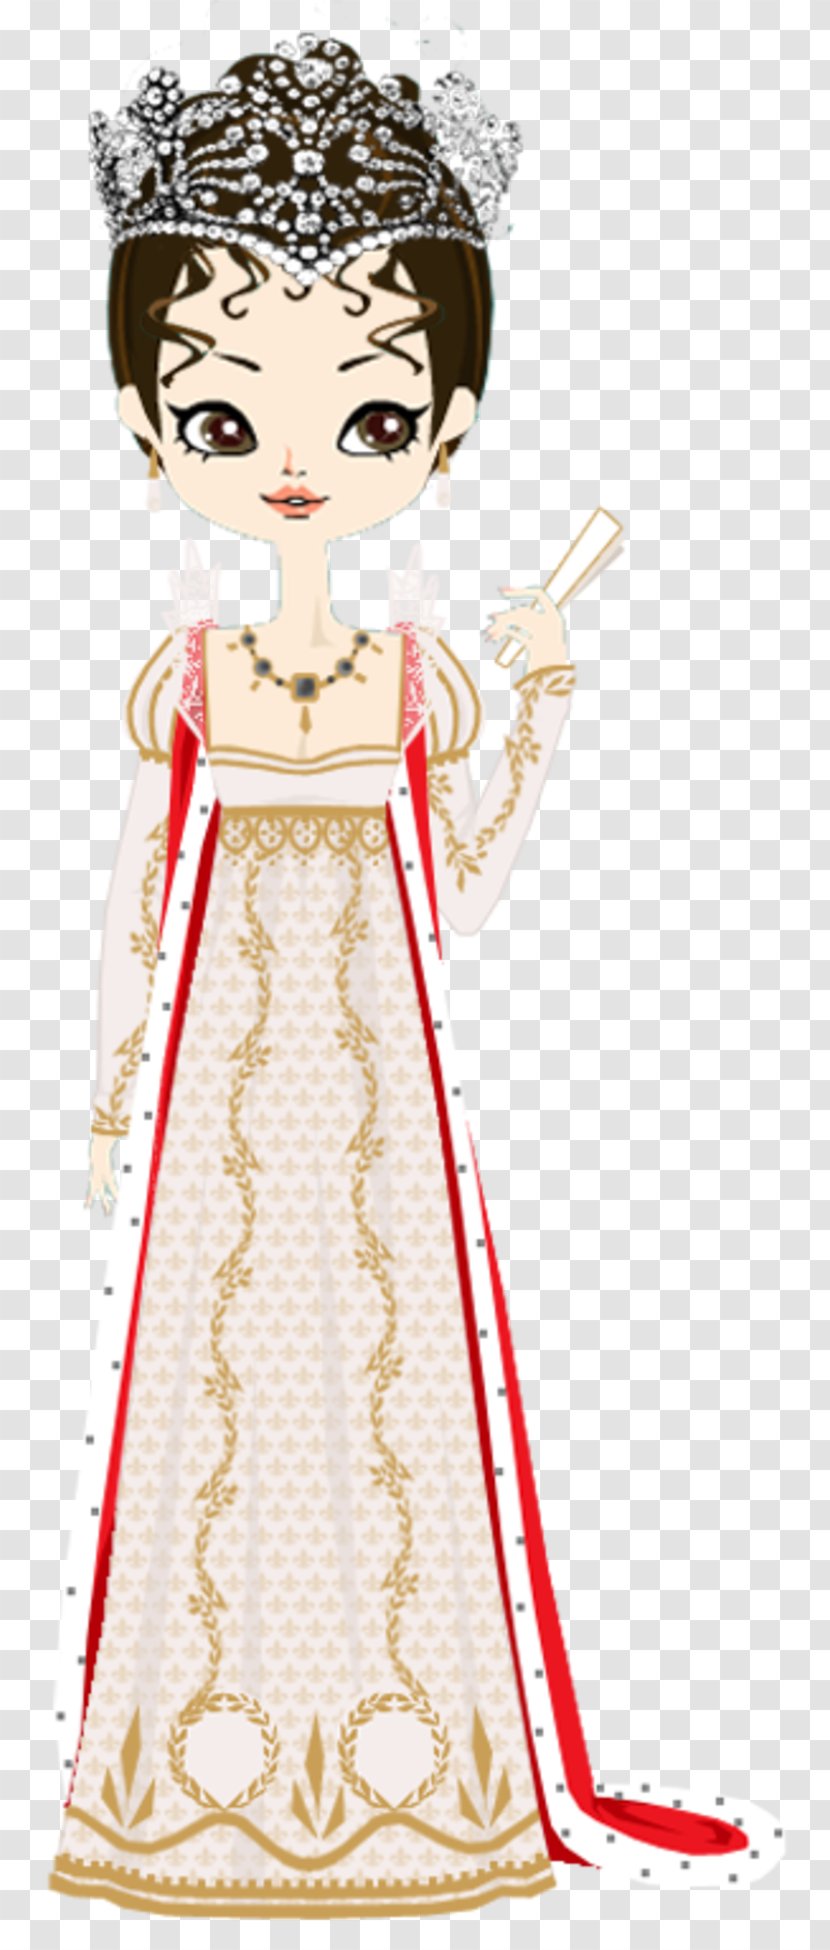 DeviantArt Illustration Gown Woman - Silhouette - Doll House Transparent PNG